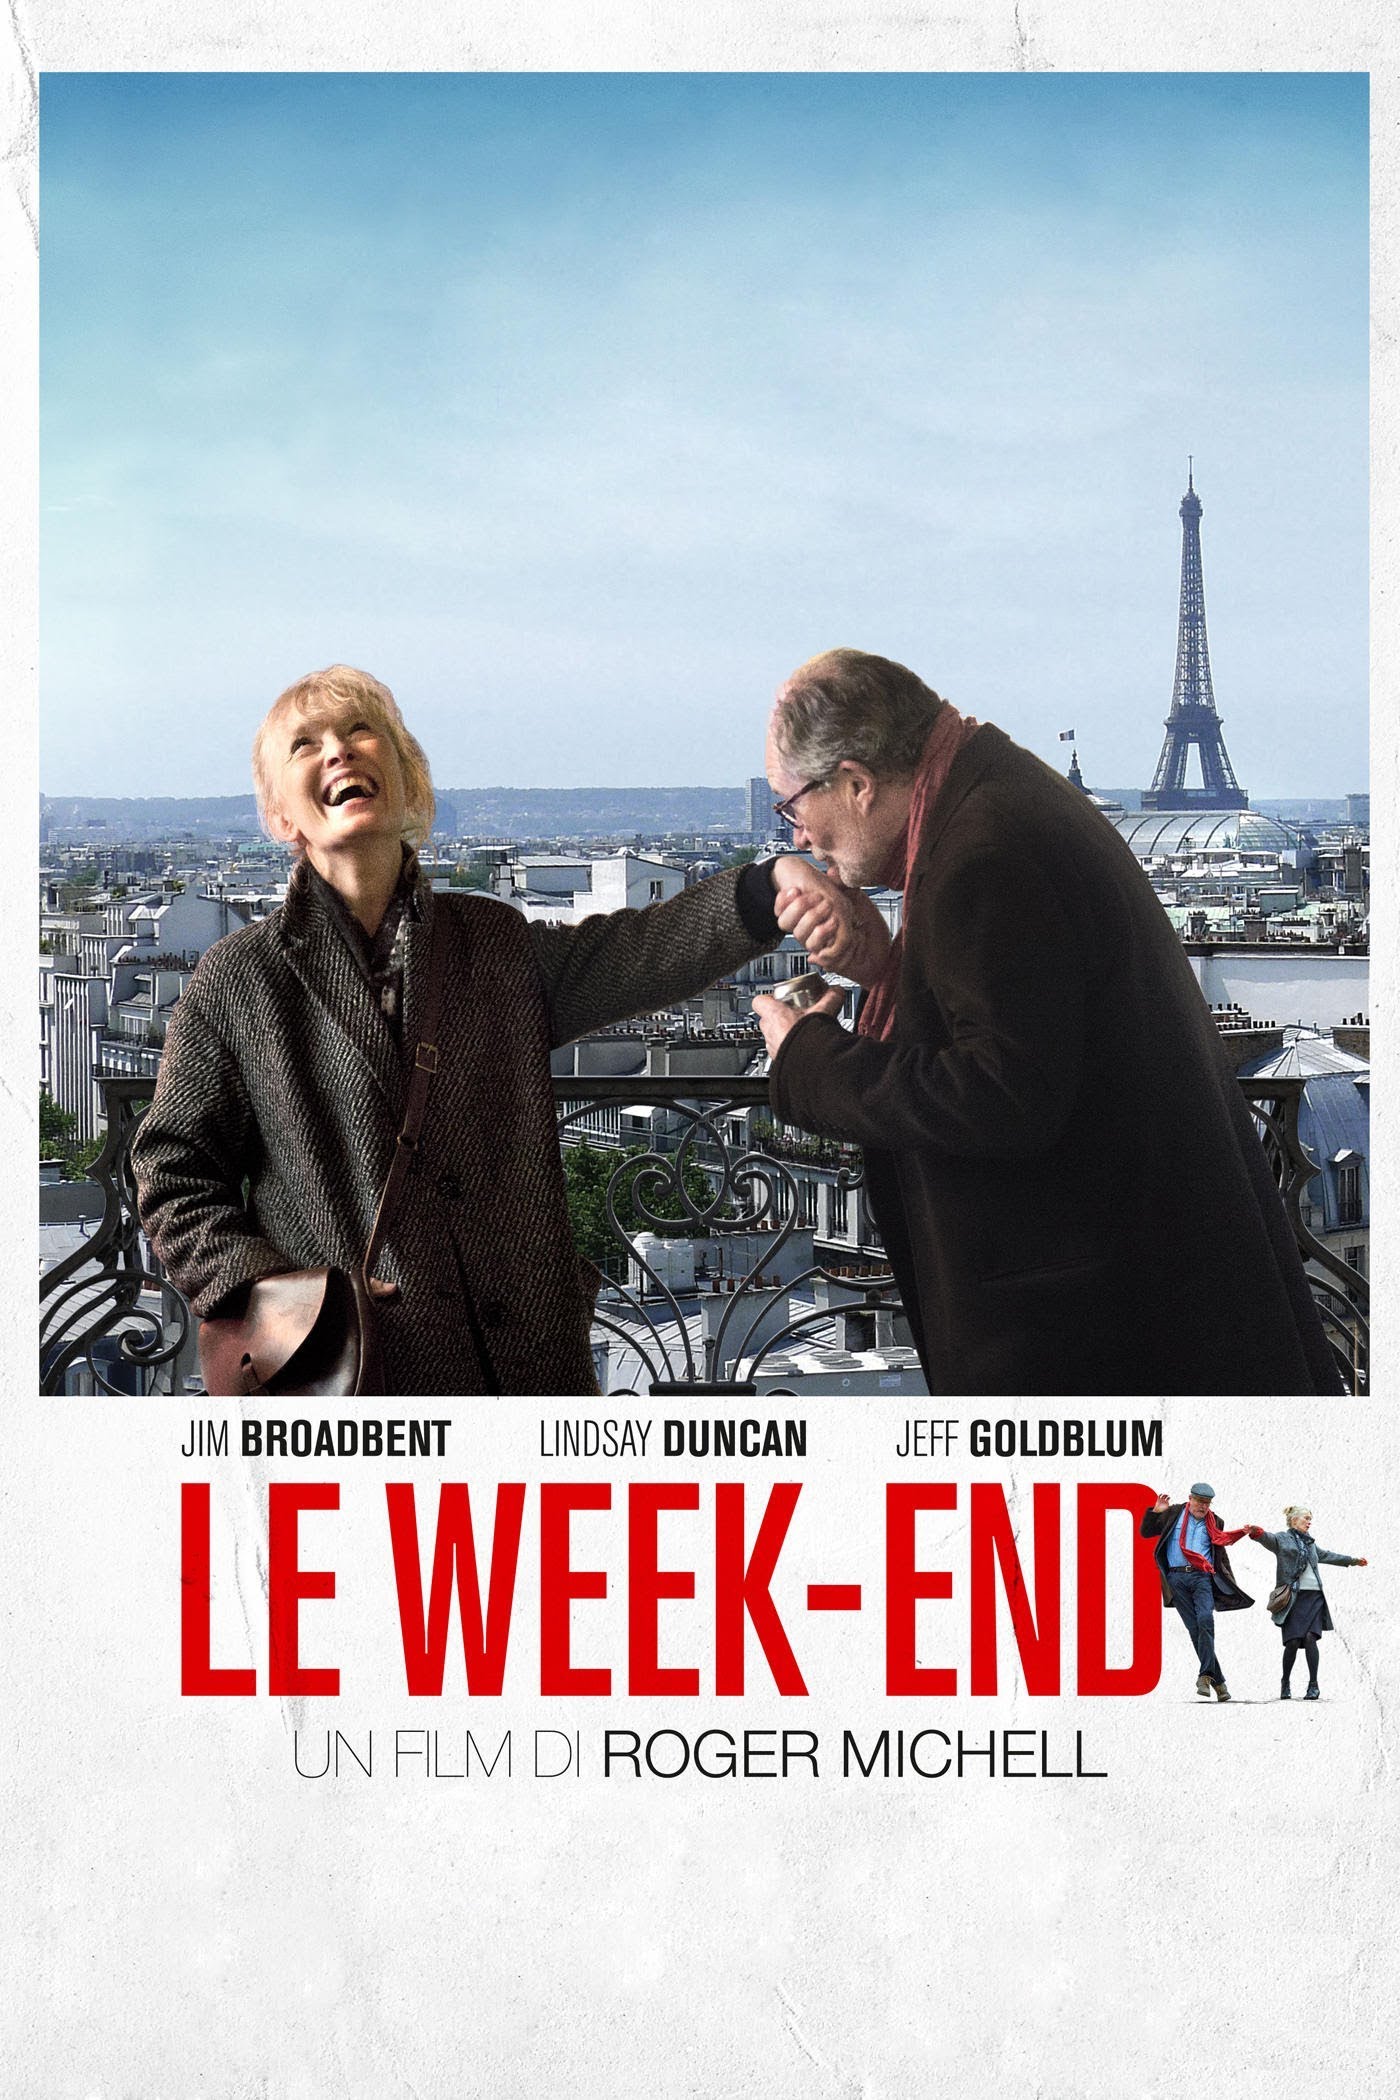 Le Week-End [HD] (2014)